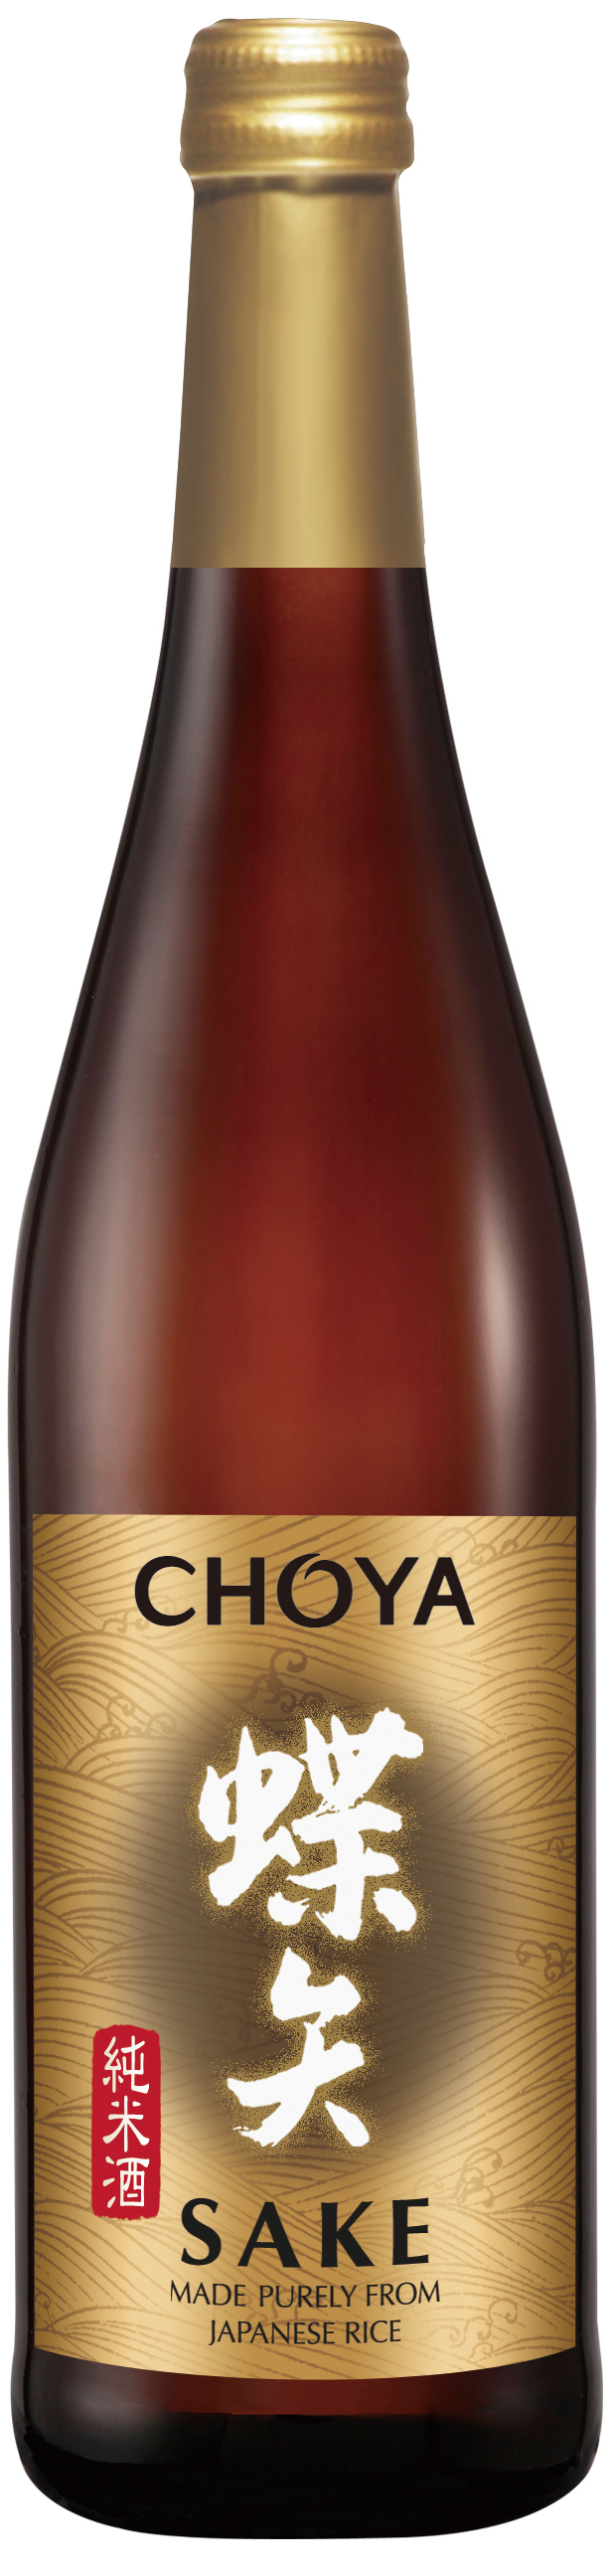 Sake Choya 14.5% 0.75L